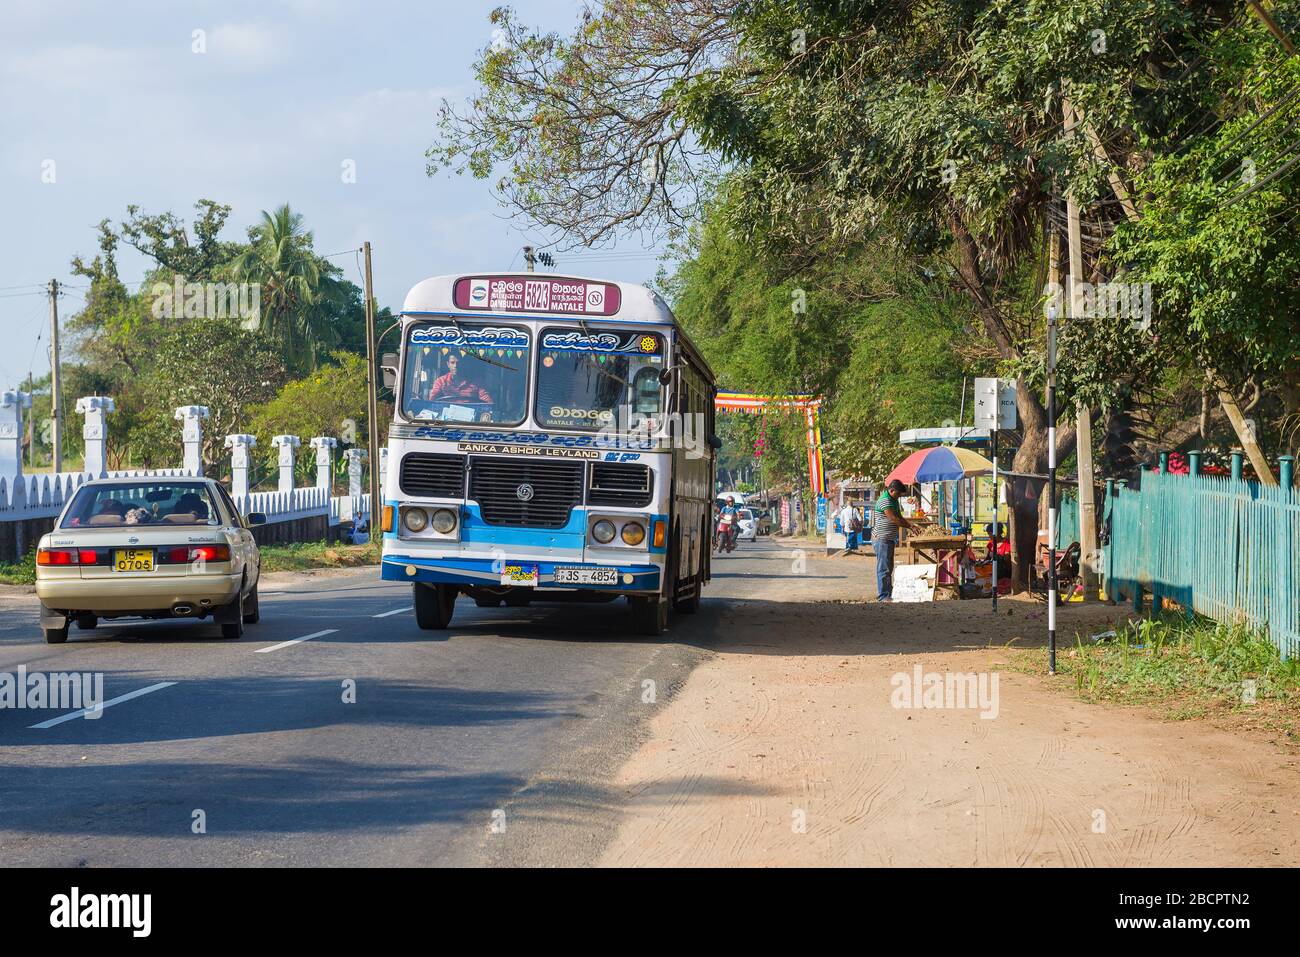 ANURADHAPURA, SRI LANKA - FEBRUARY 08, 2020: Long-distance bus 'Matale-Dambulla' on the city street Stock Photo